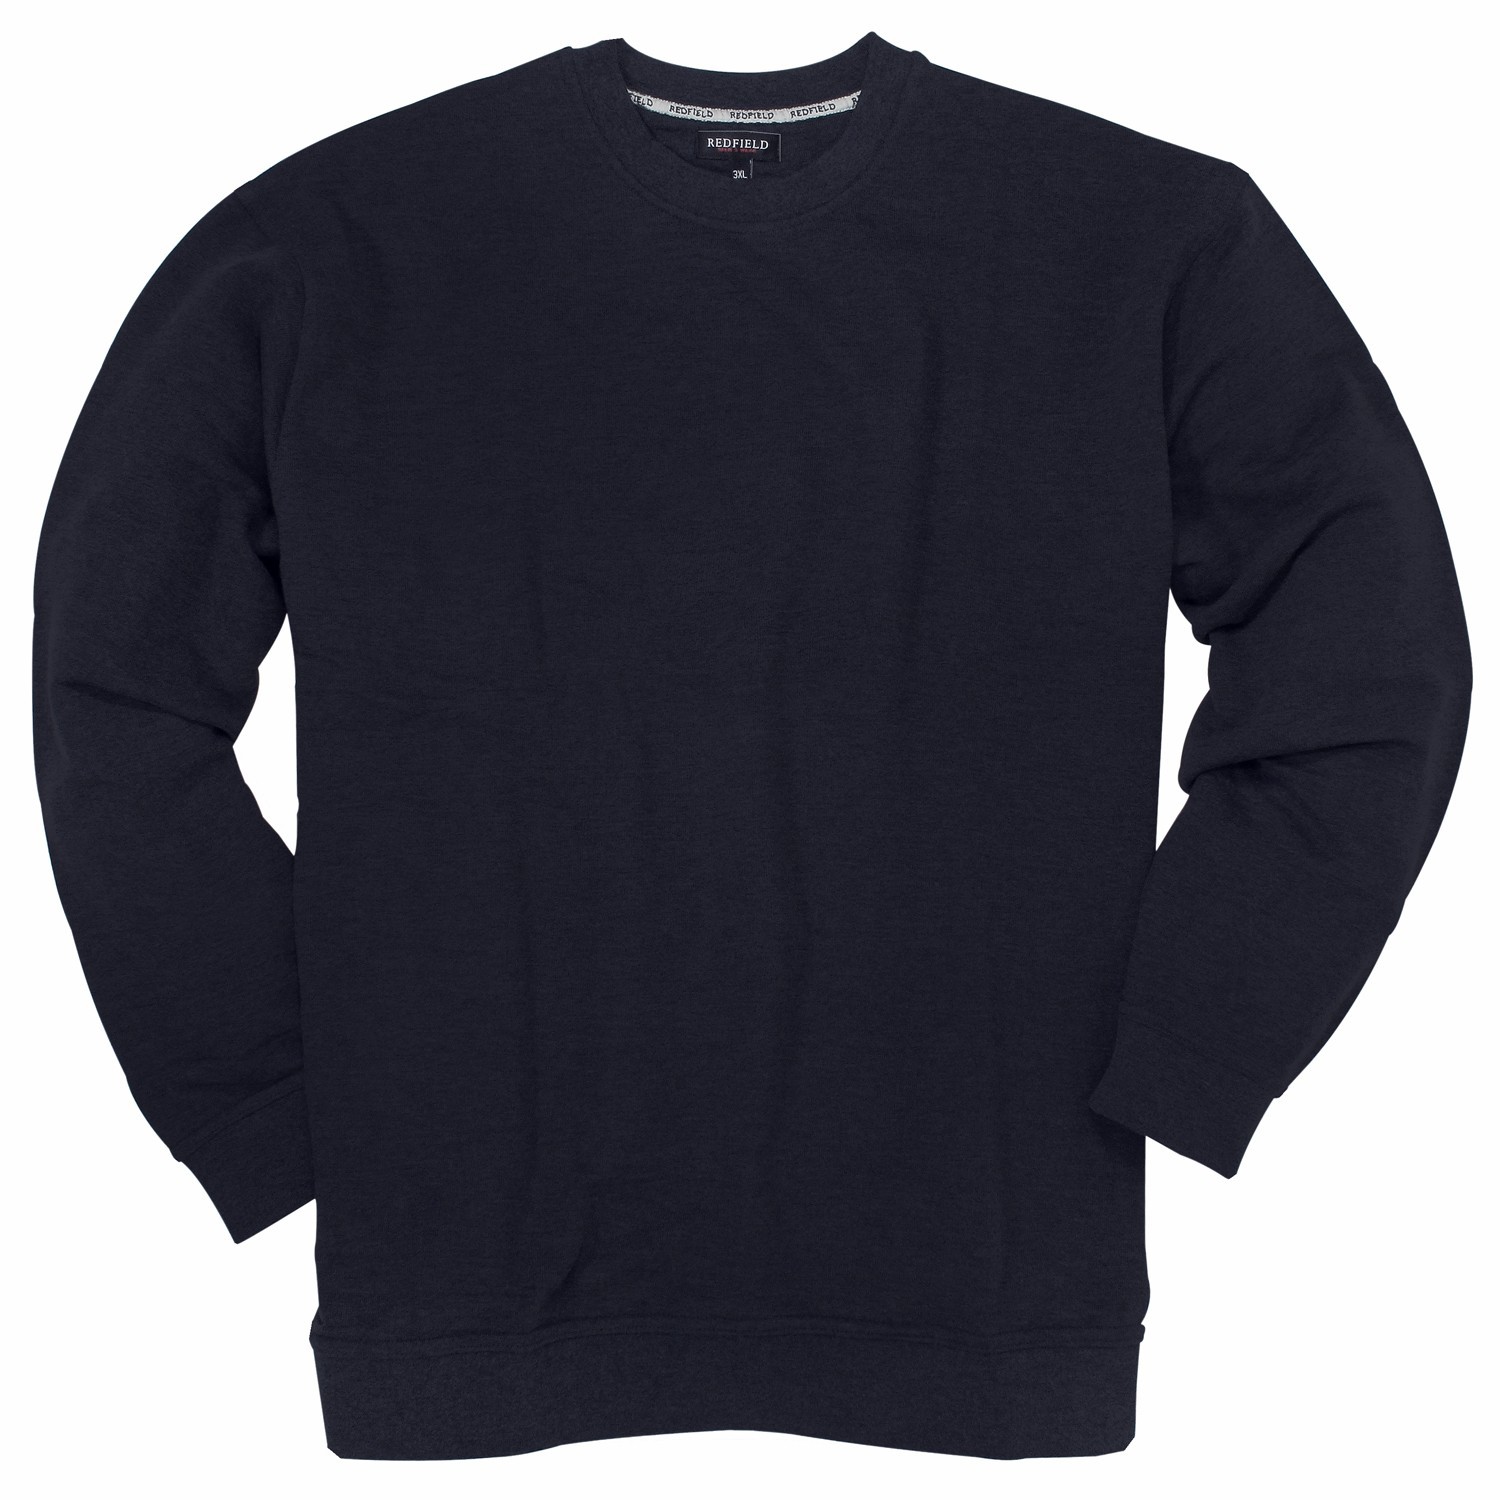 Sweatshirt in darkblue by Redfield in plus sizes up to 10XL